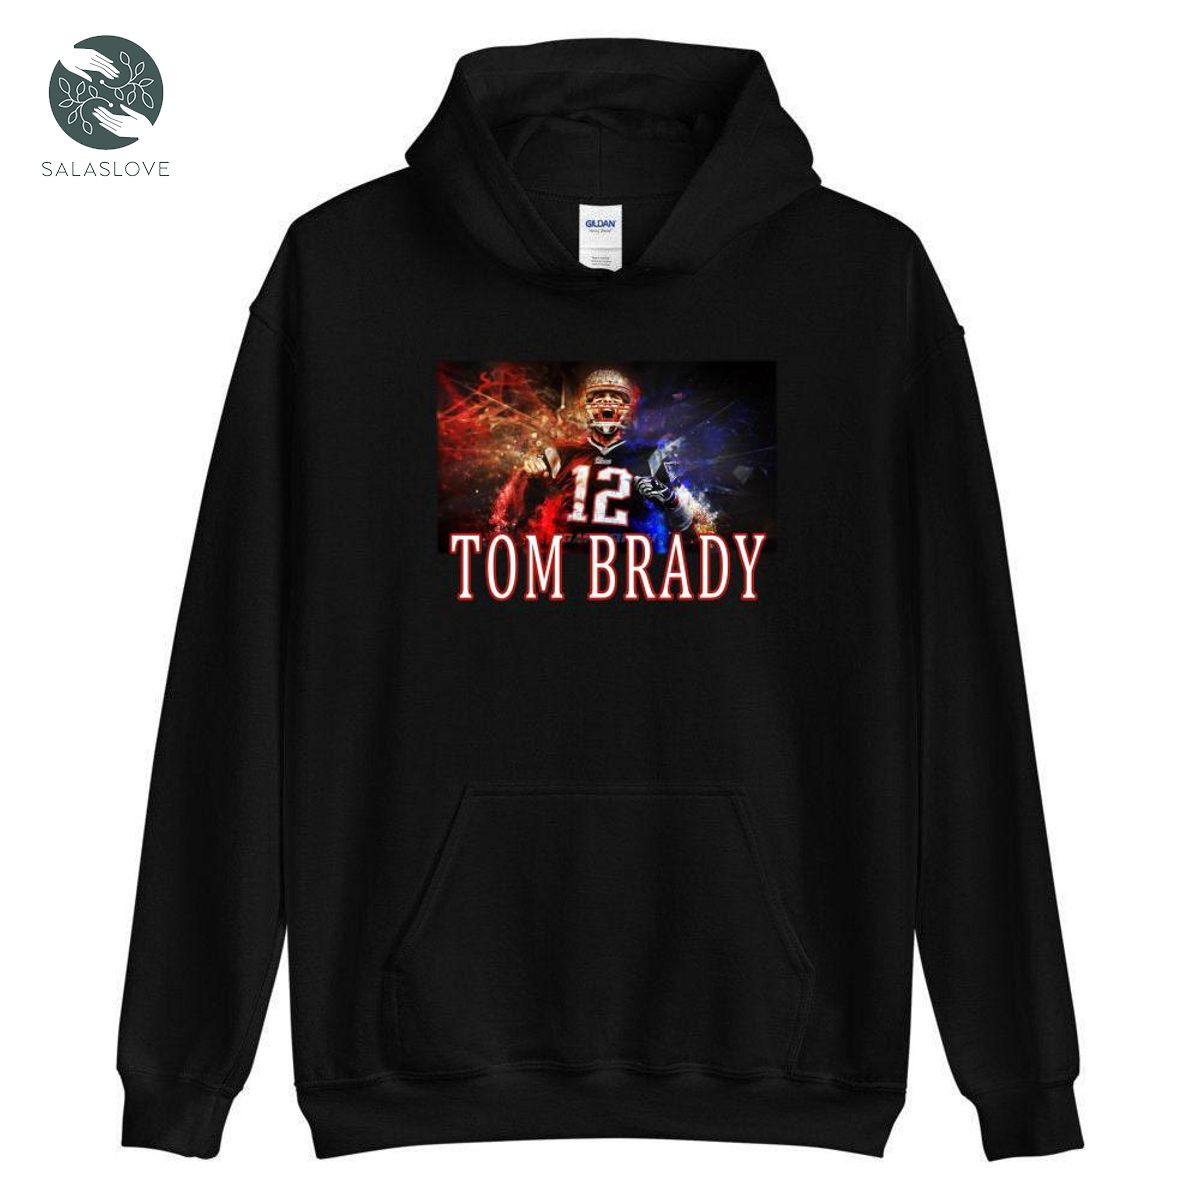 Tom Brady The Goat 12 NFL Player Super Bowl Shirt